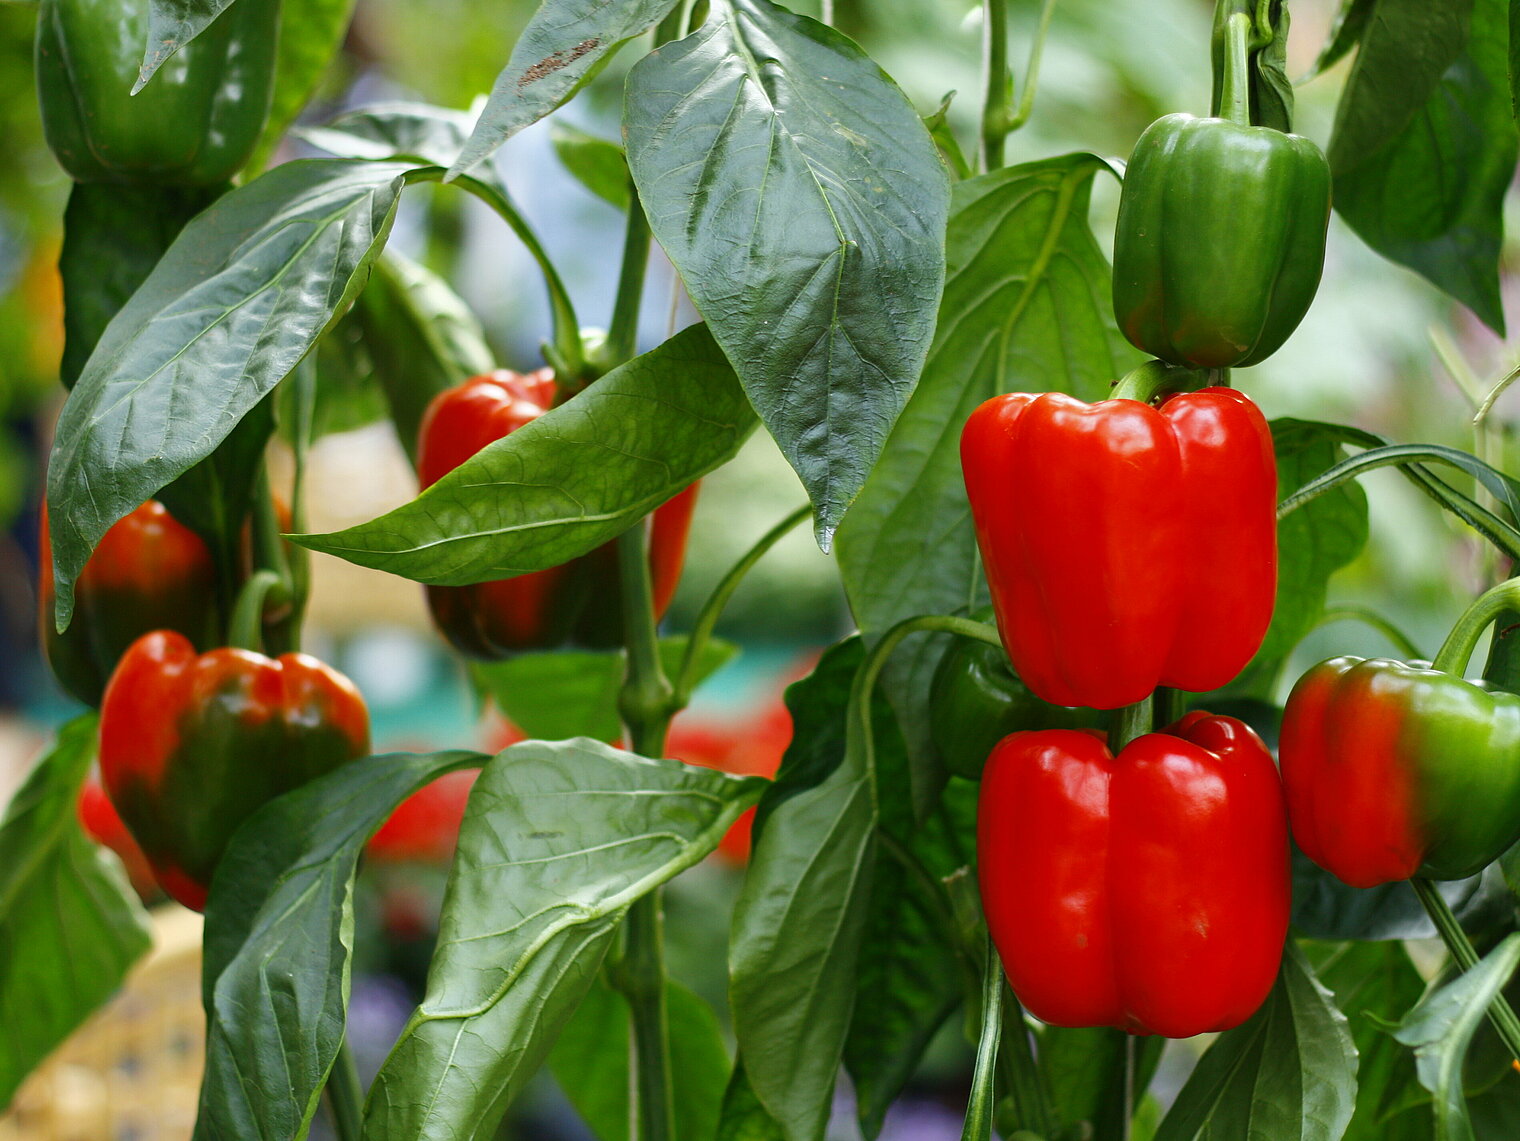 Bell pepper cultivation